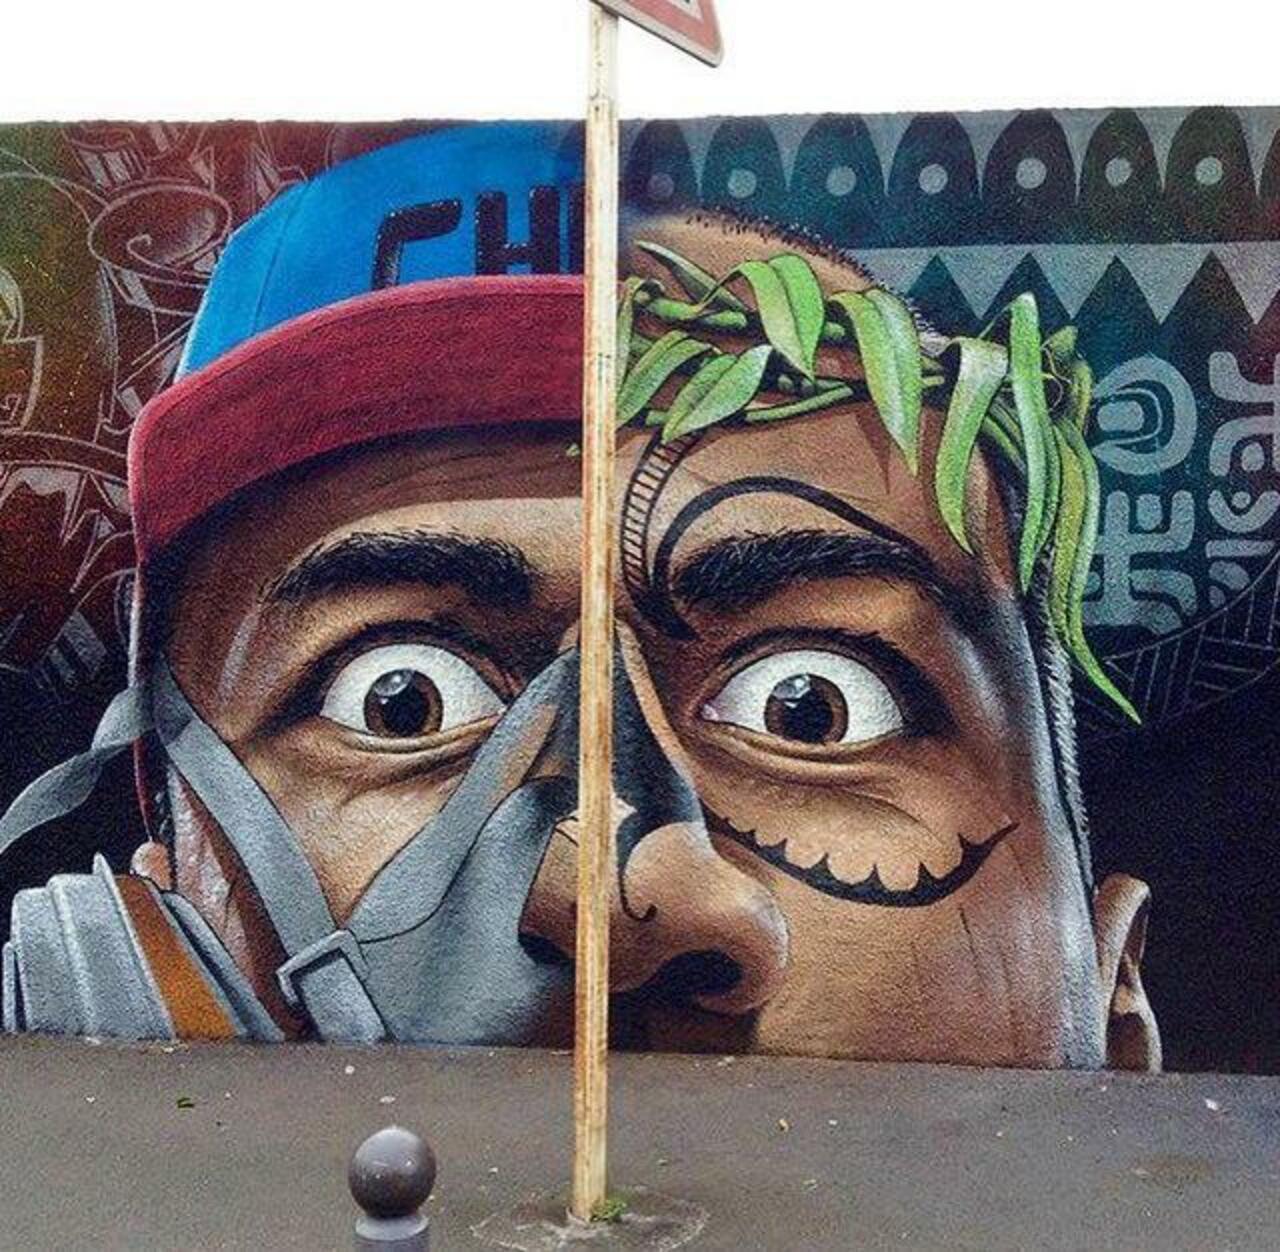 RT @Knoyrights: New Street Art by ChemiS 

#art #arte #graffiti #streetart http://t.co/qtVVUVgzAm